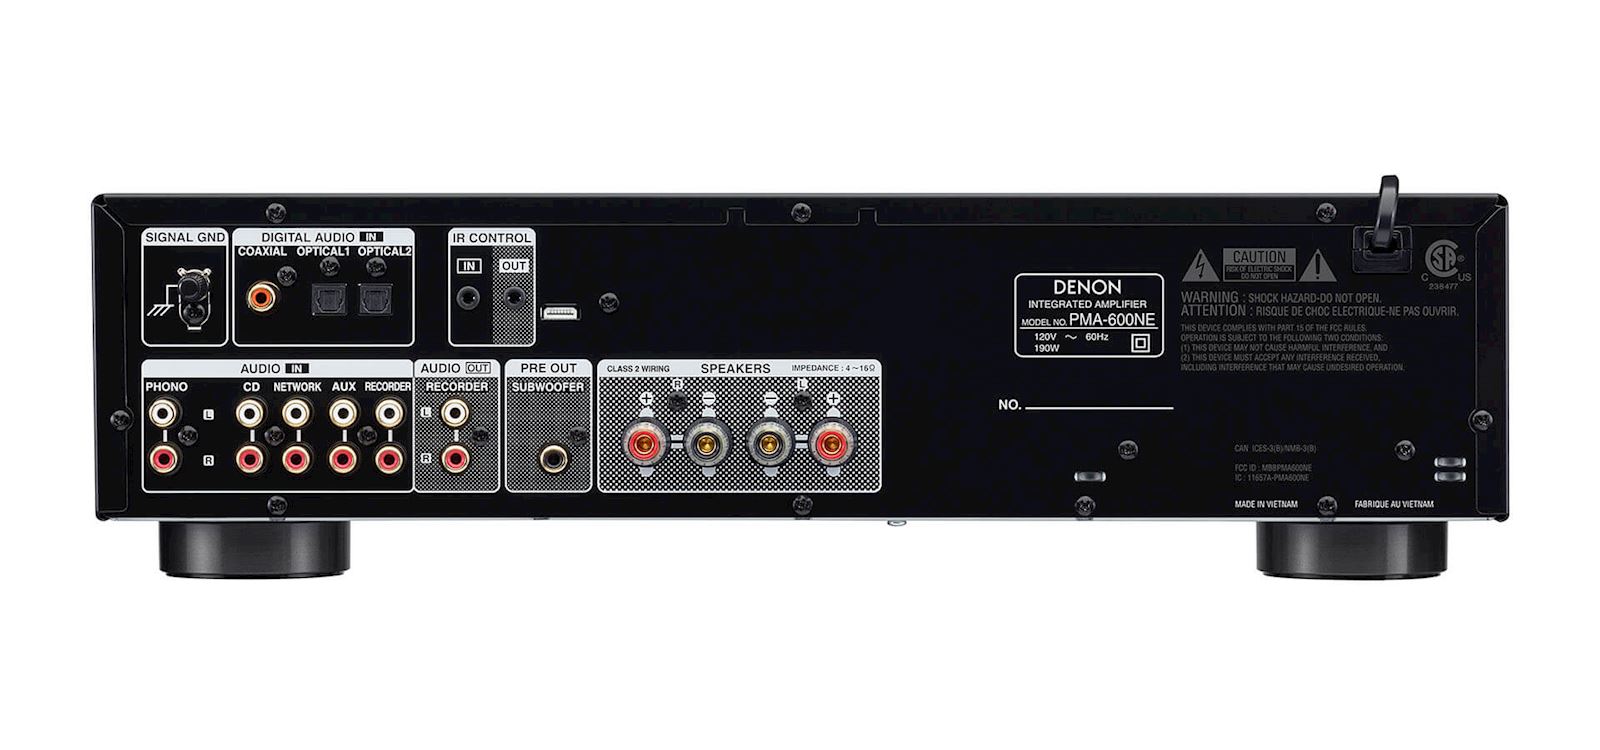 Thiết kế phía sau của Ampli Denon PMA 600-NE - AnhDuyen Audio